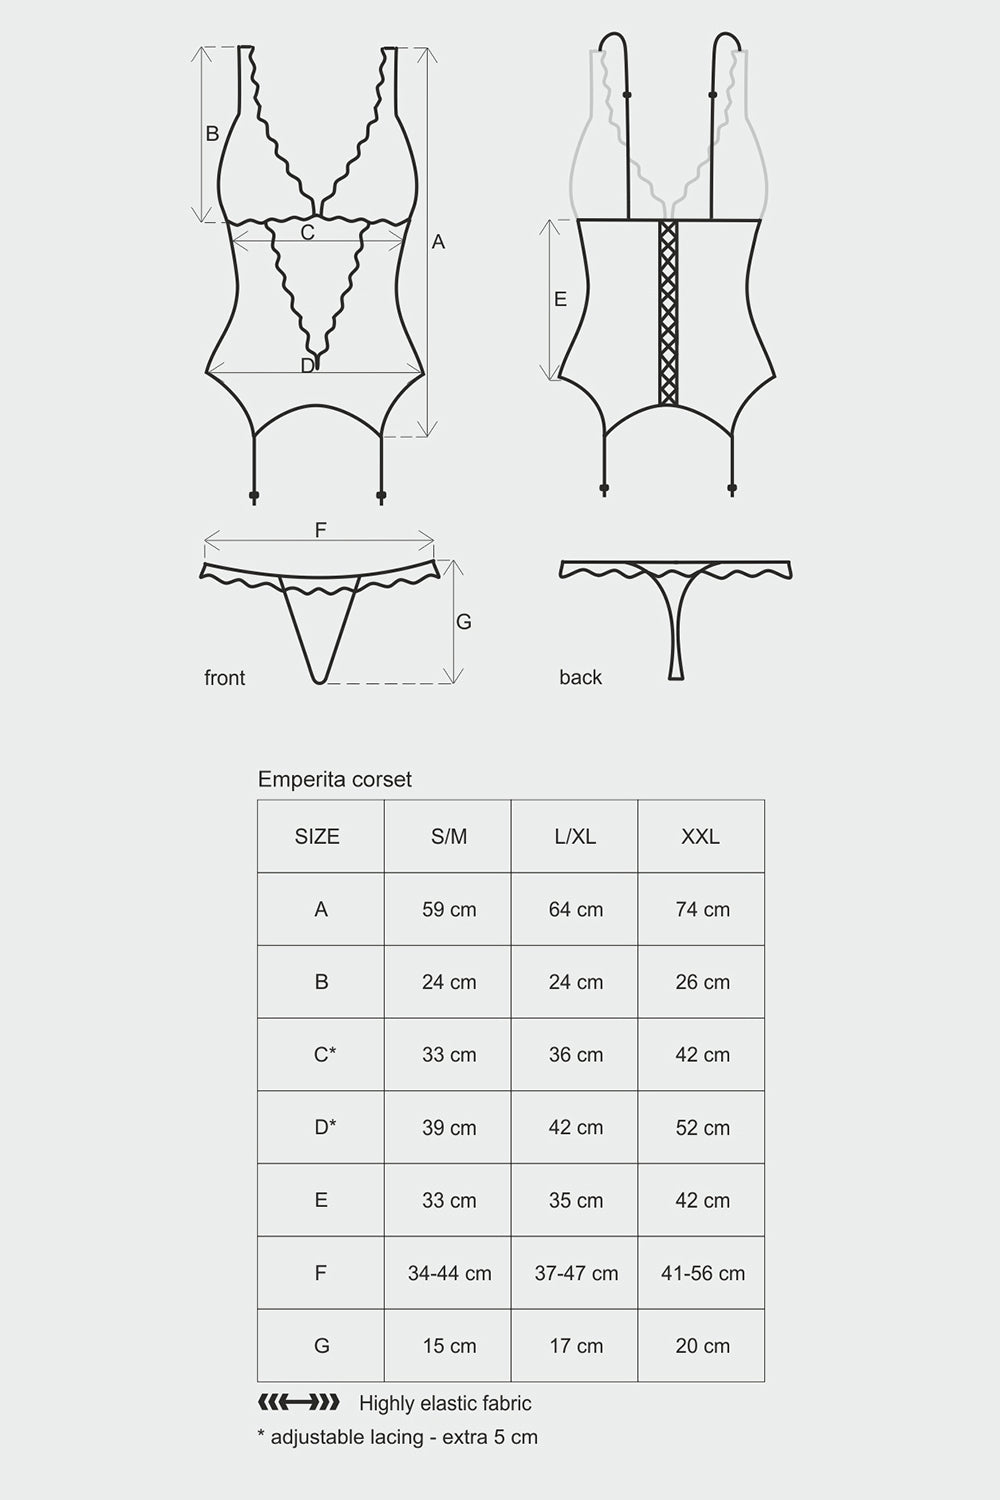 Feminine corset with suspenders